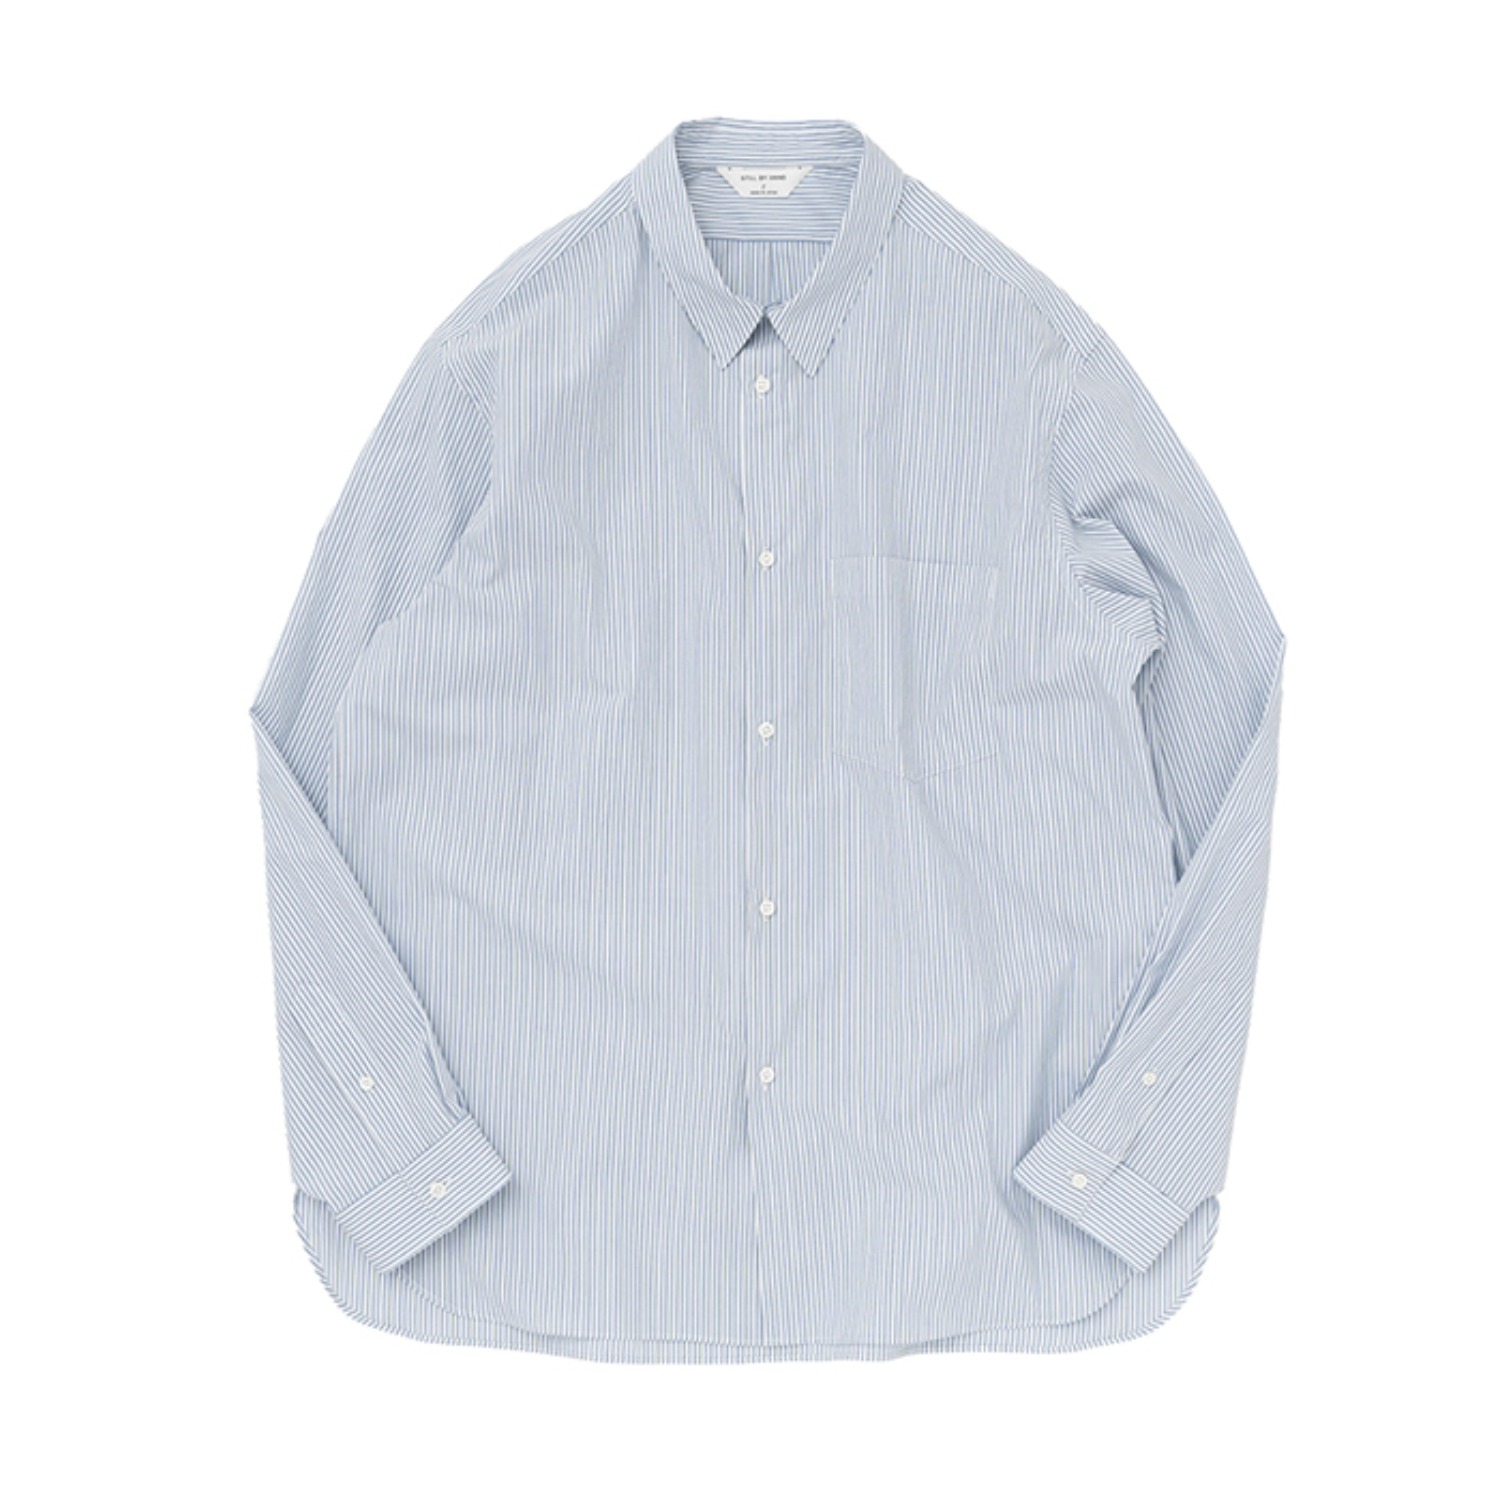 Regular collar shirt blue stripe